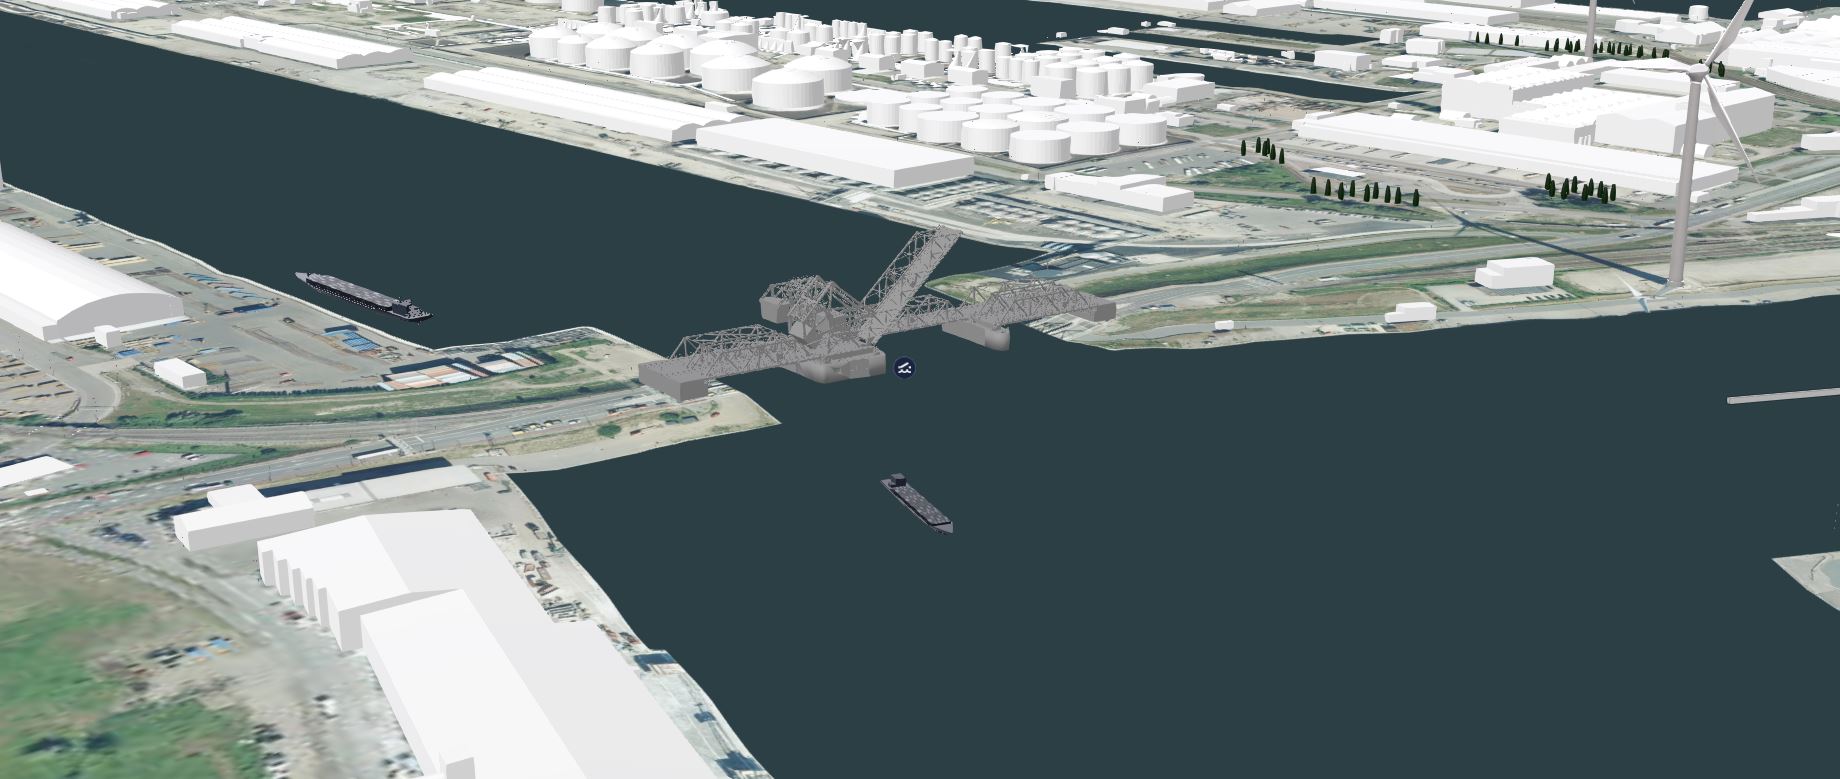 Part of digital twin Port of Antwerp-Bruges